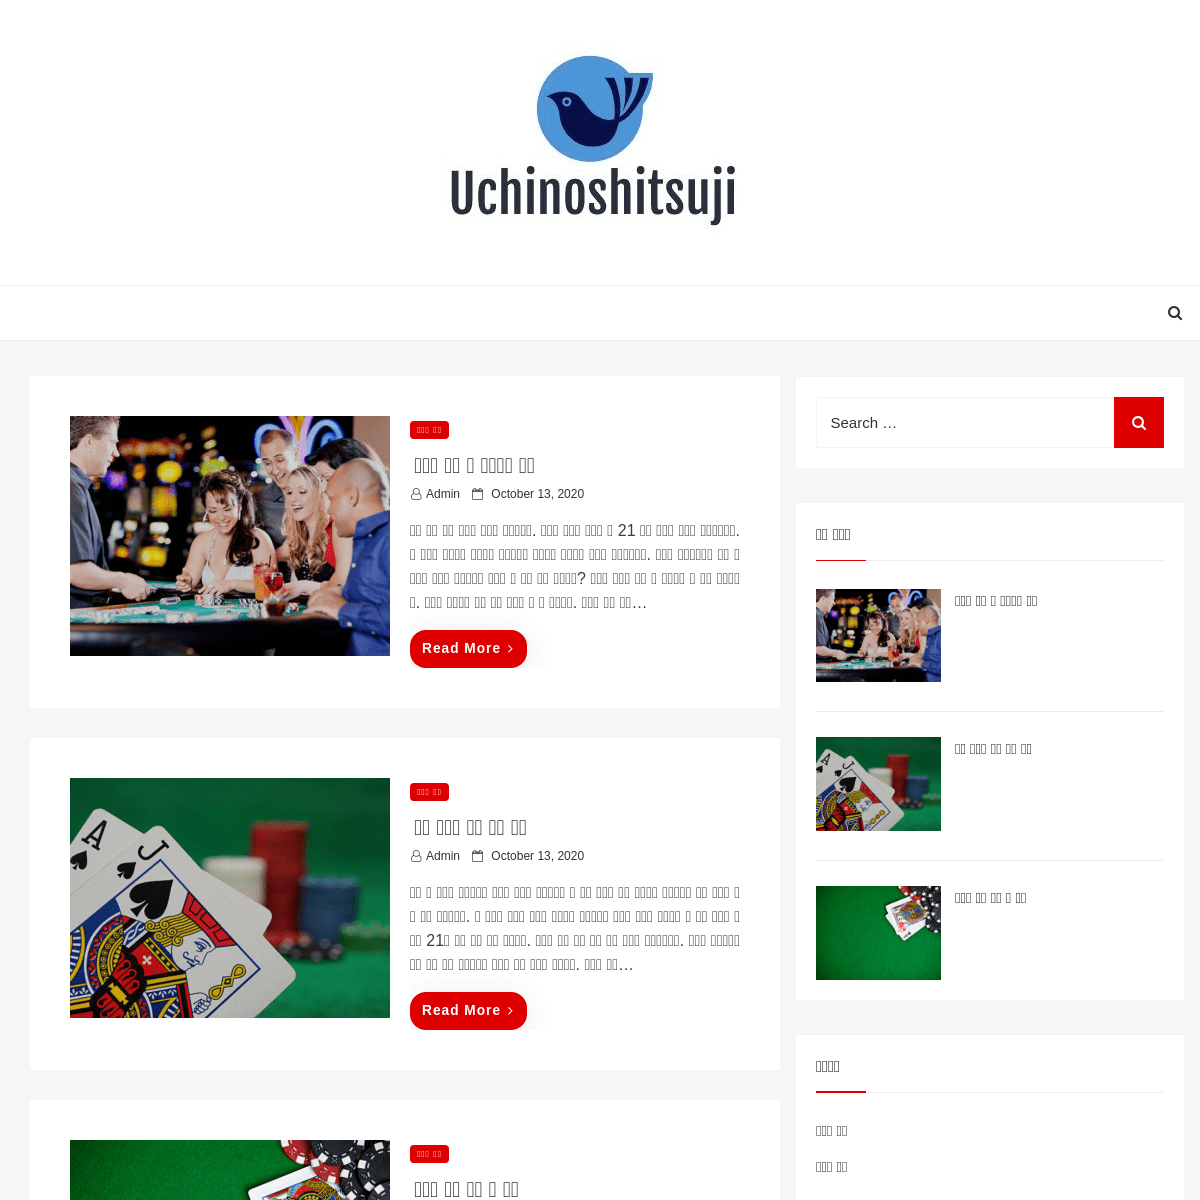 A complete backup of https://uchinoshitsuji.com